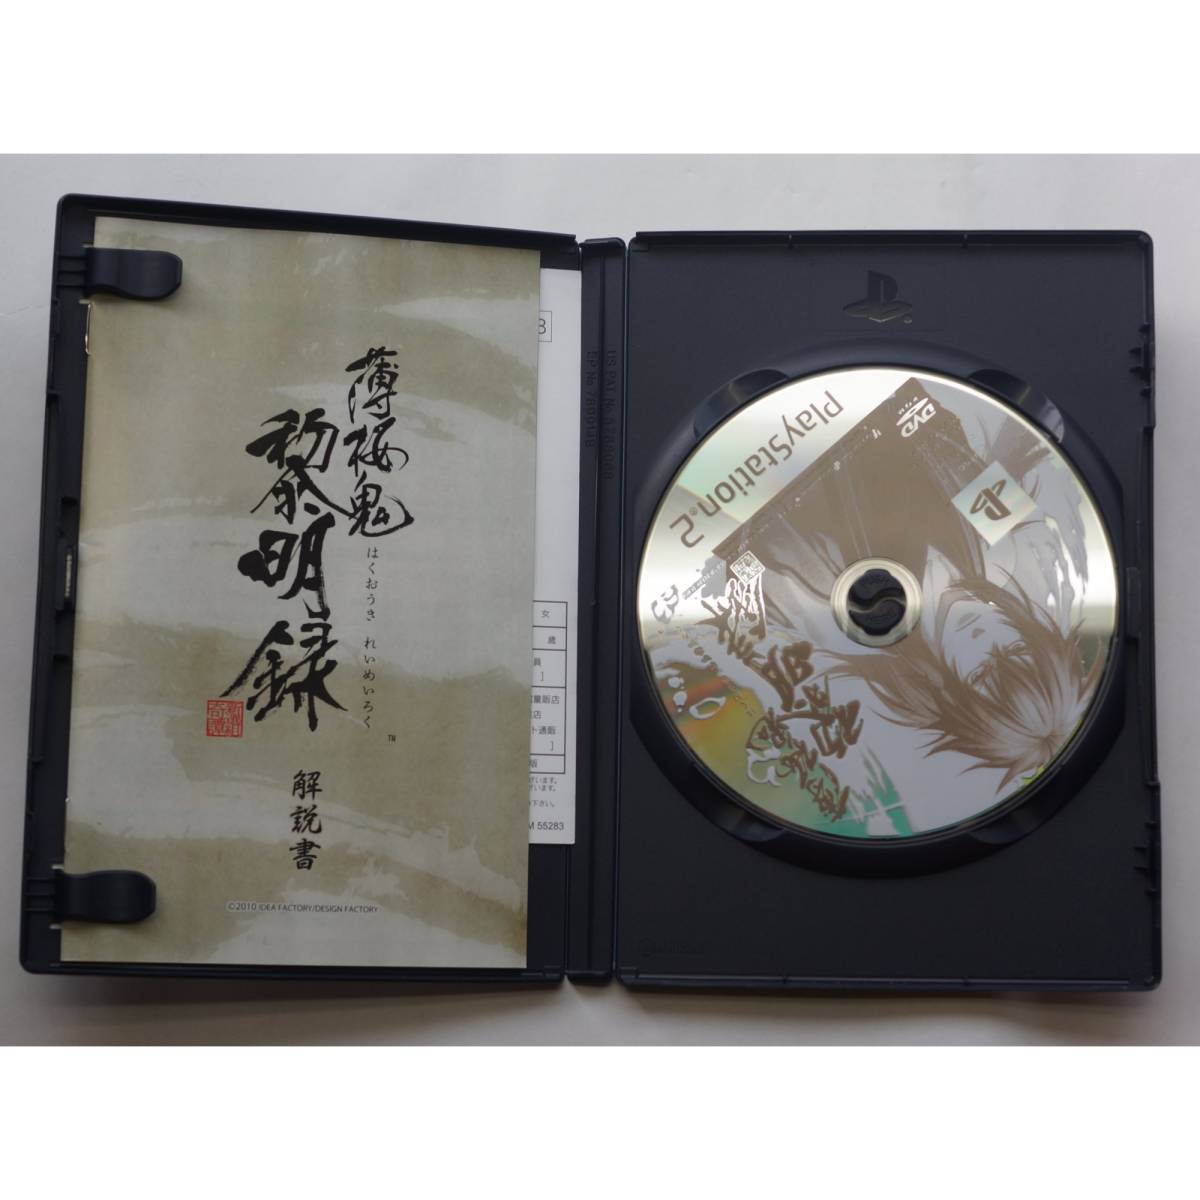 PS2 ゲーム 薄桜鬼 黎明録 SLPM-55273